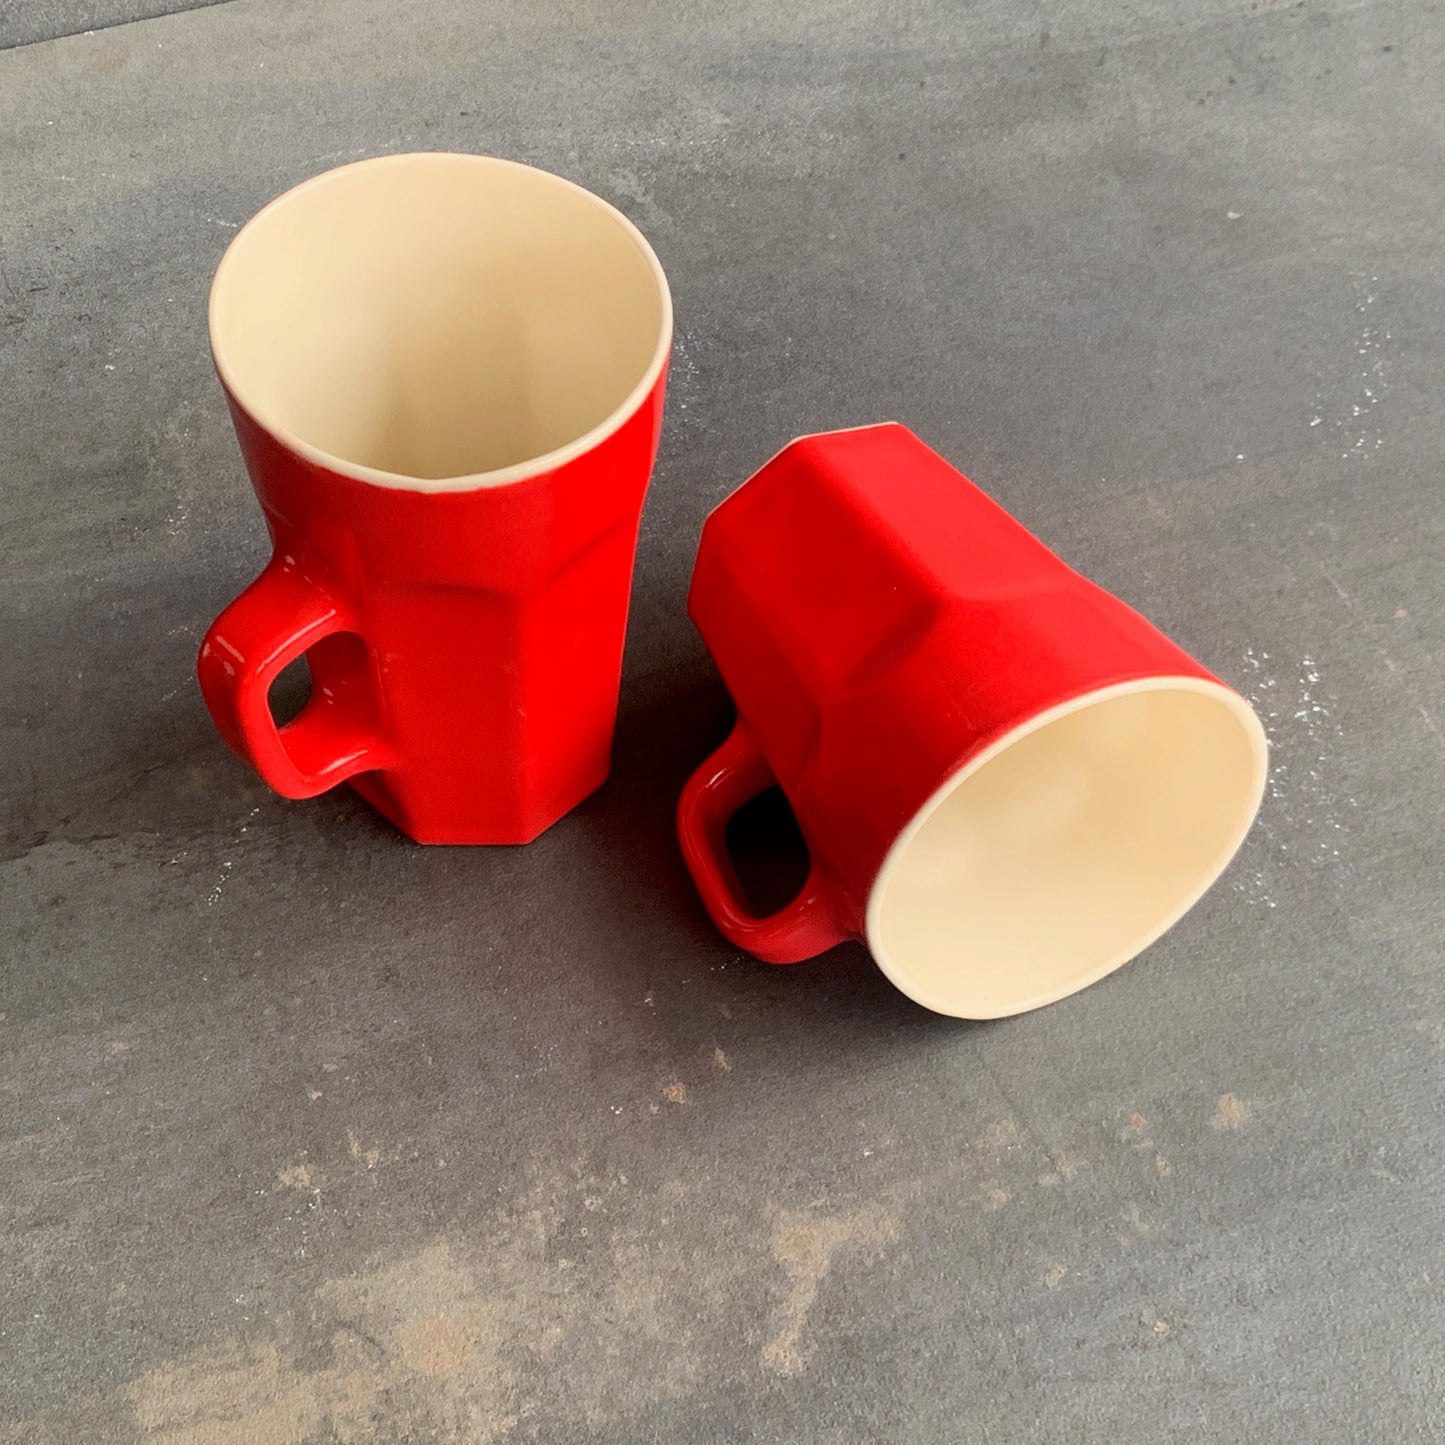 Classic Mug - Red / White